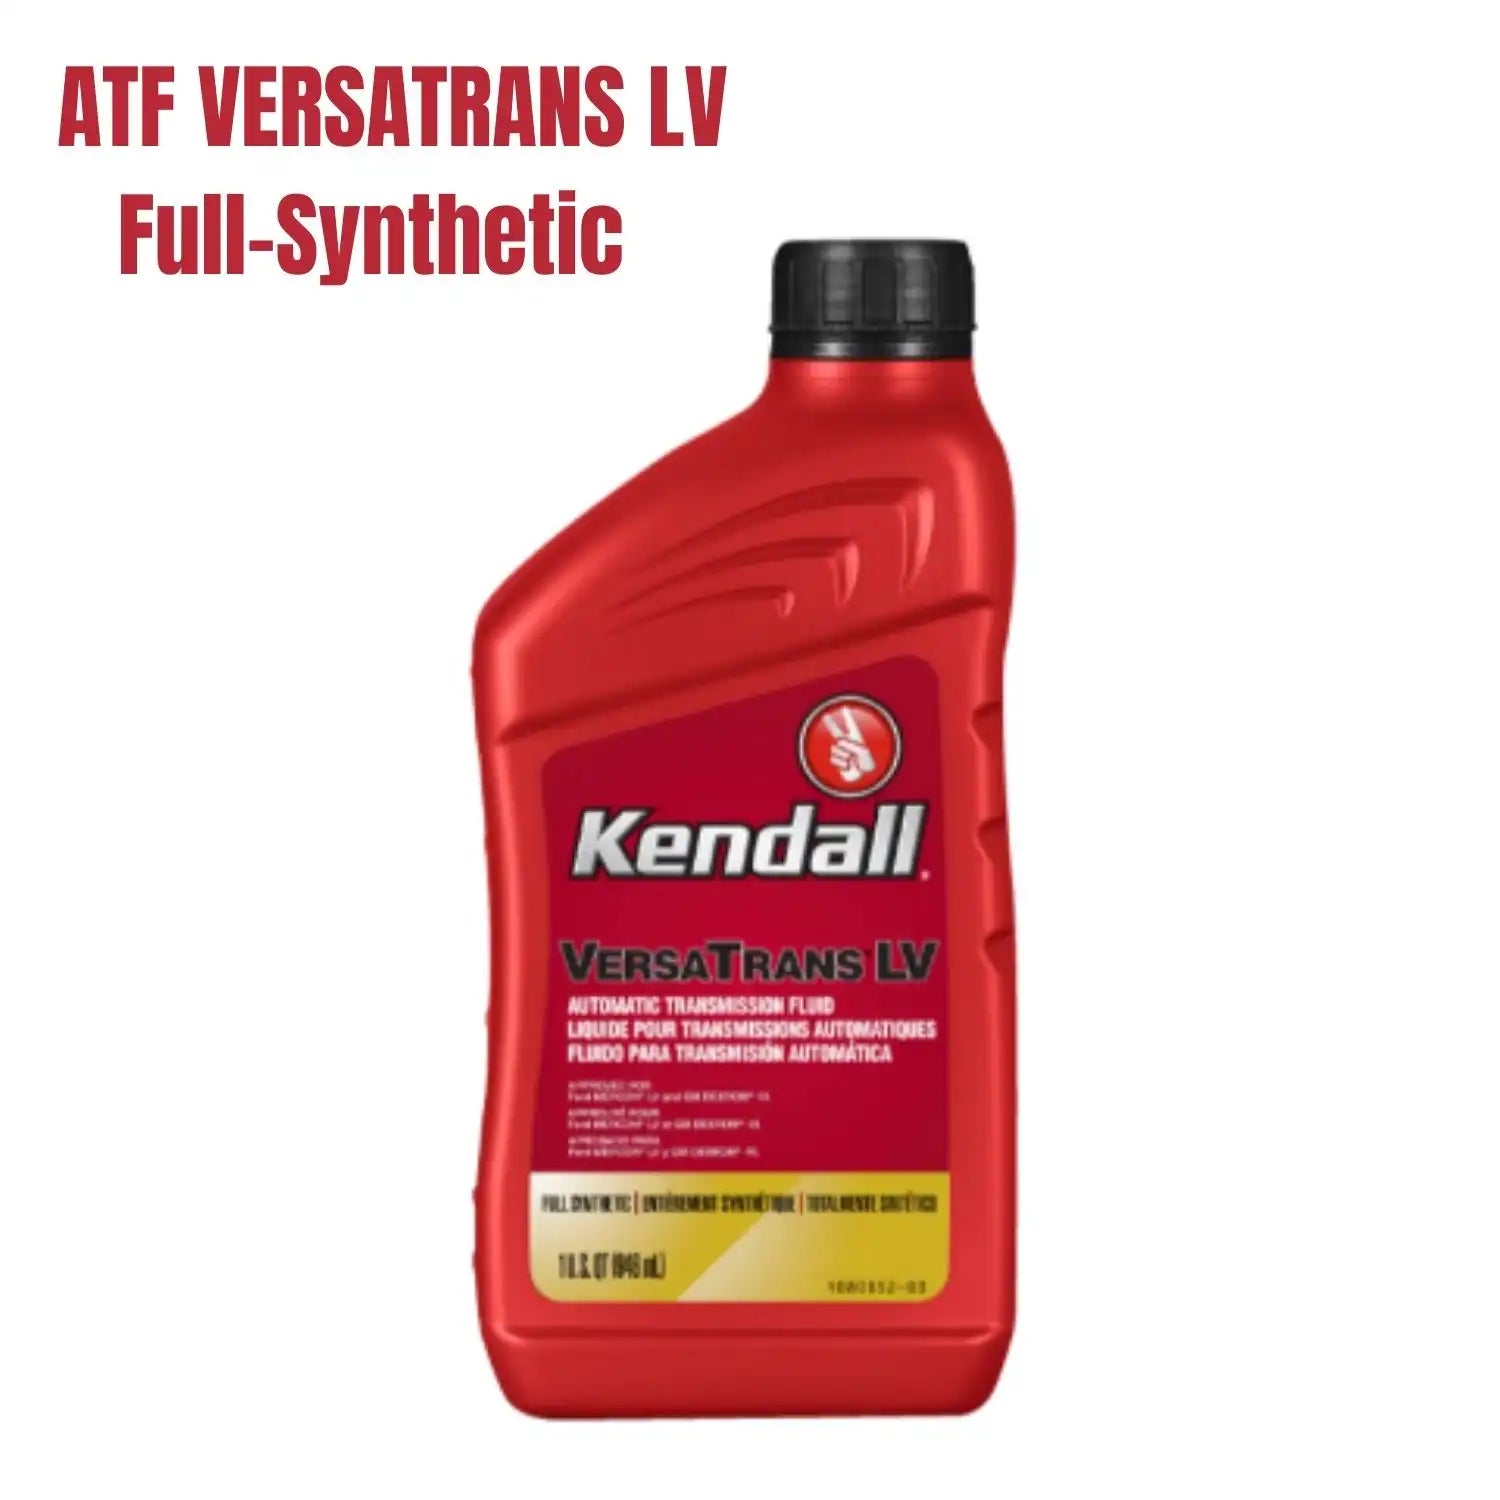 Kendall ATF VersaTrans LV Full Synthetic Car Engine Oil (1 Liter)